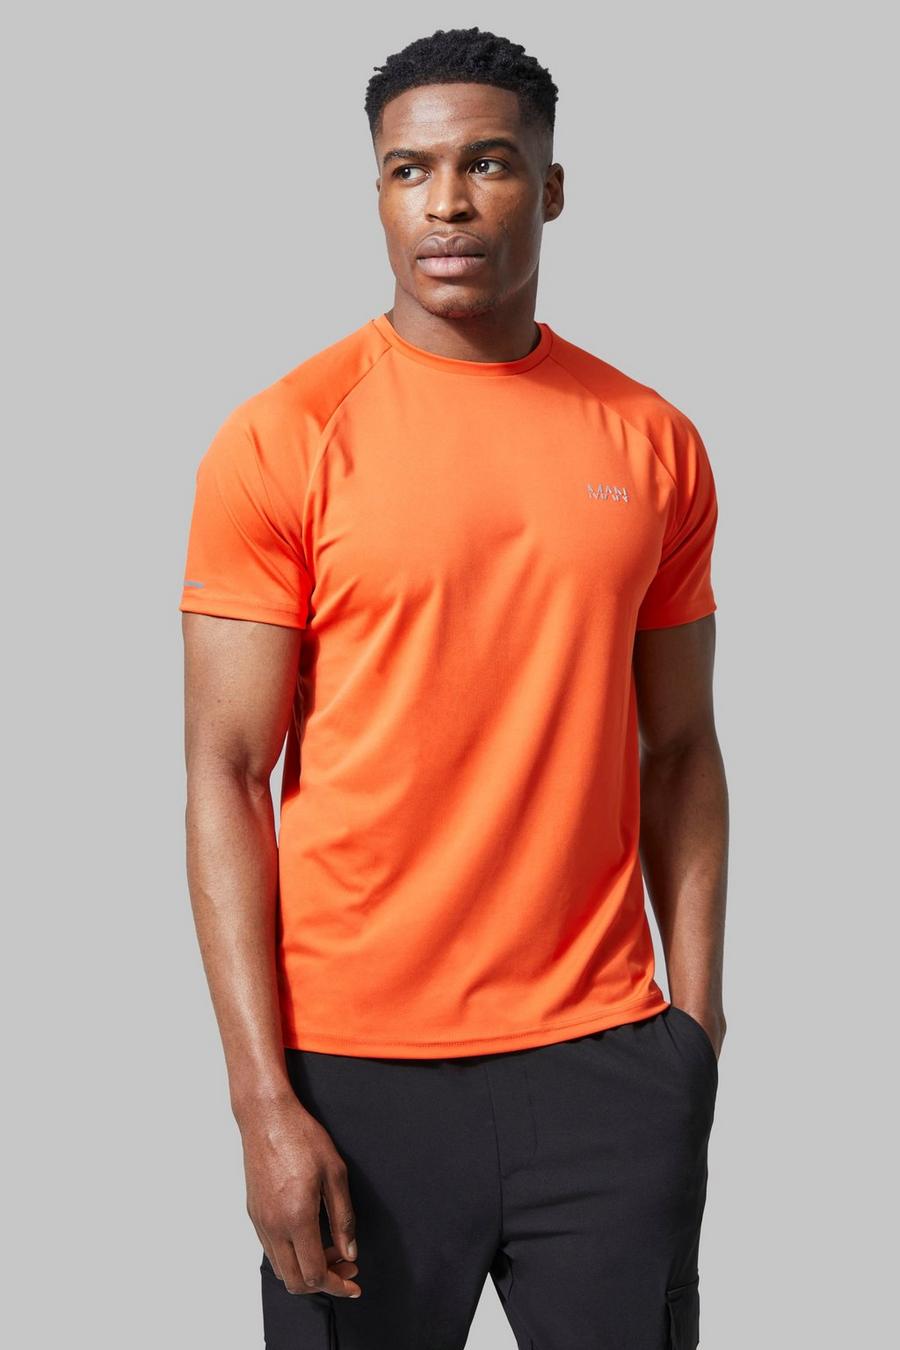 T-shirt Man Active Gym con maniche raglan, Orange arancio